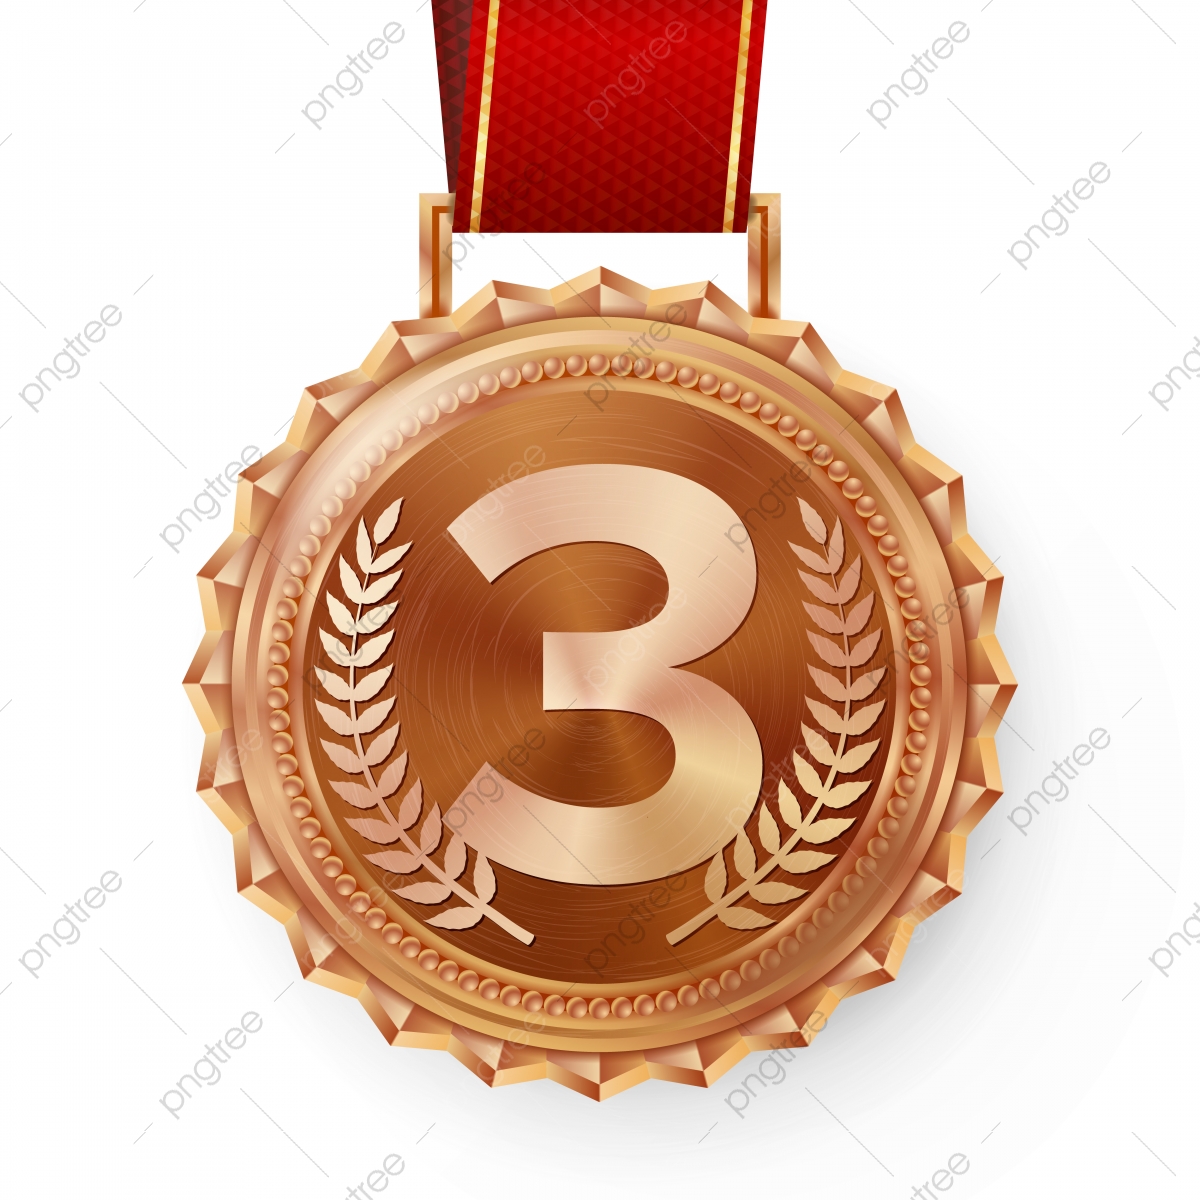 pngtree-bronze-medal-vector-bronze-copper-3rd-place-badge-sport-game-bronze-png-image_5204995.jpg